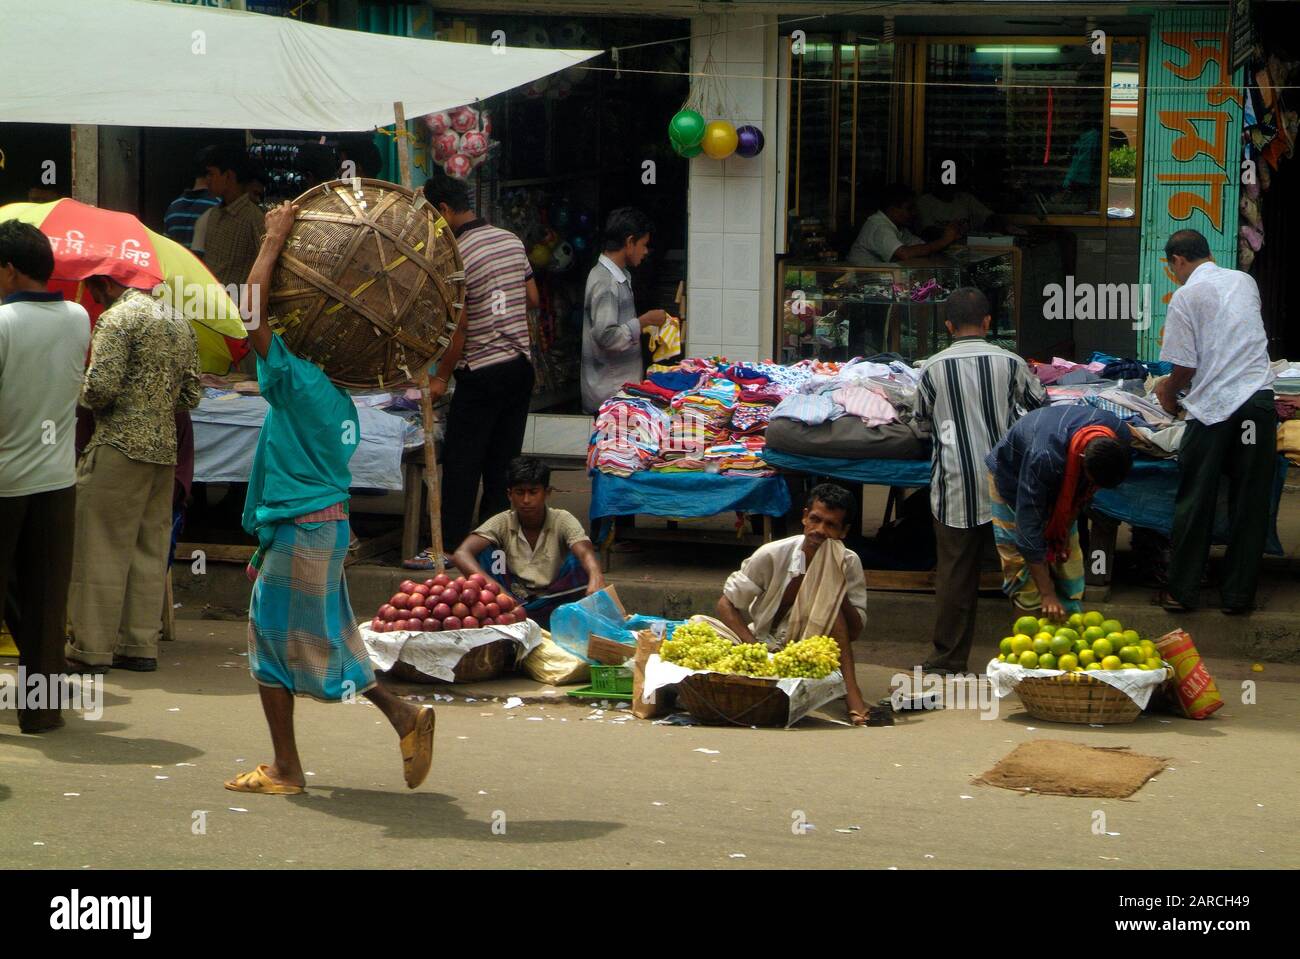 Dhaka, Bangladesh - September 17, 2007: Unidentified people and street vendors on traditional market Stock Photo